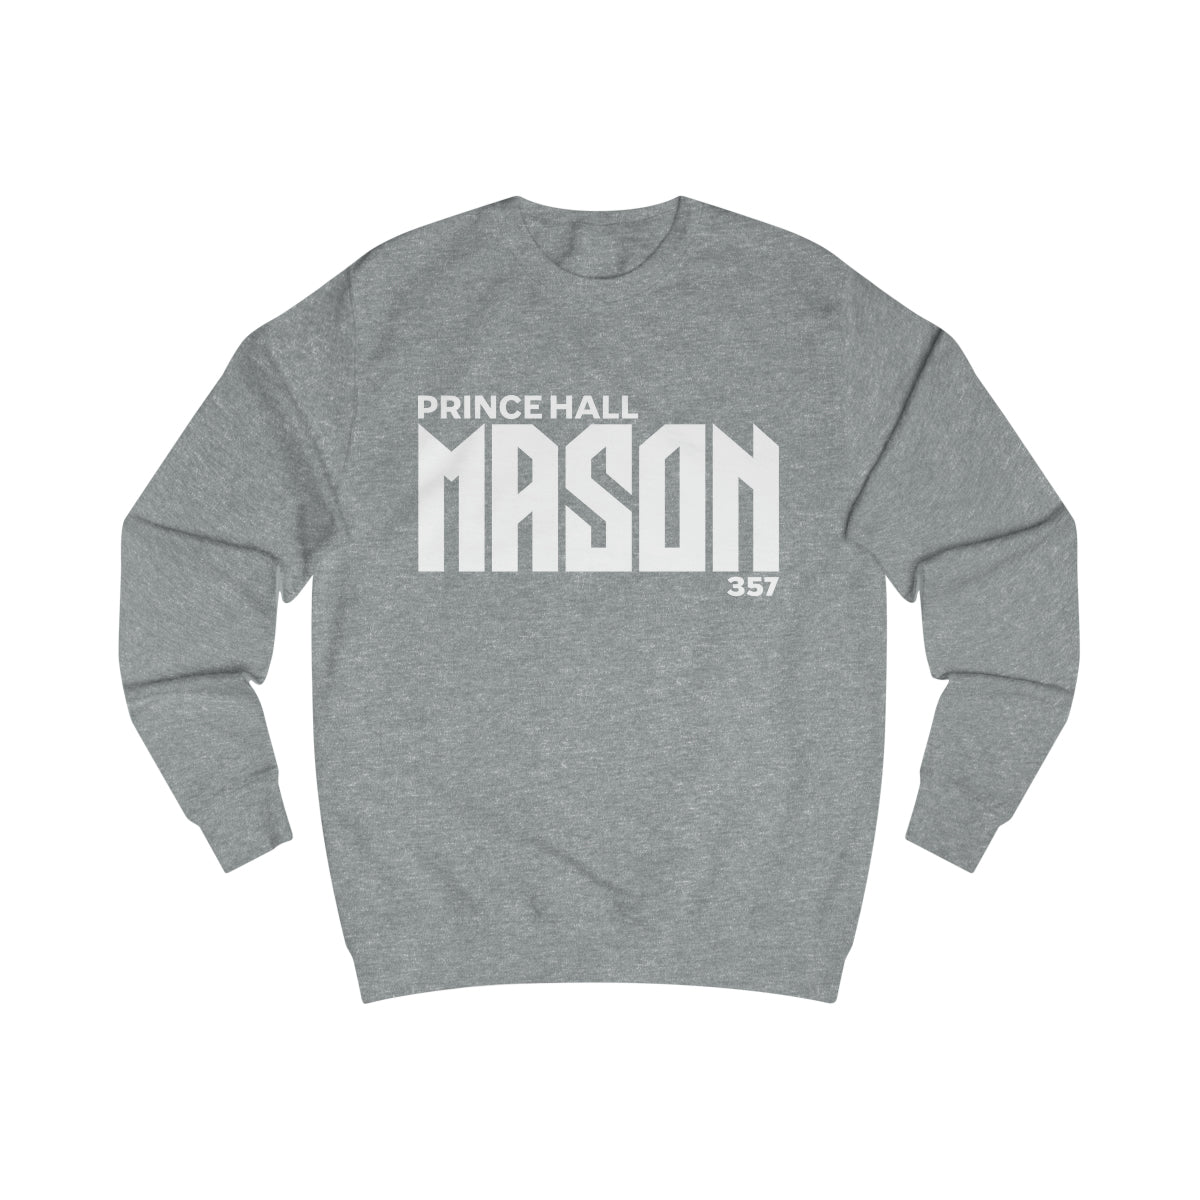 Master Mason Blue Lodge Sweatshirt - Prince Hall Mason 357 - Bricks Masons